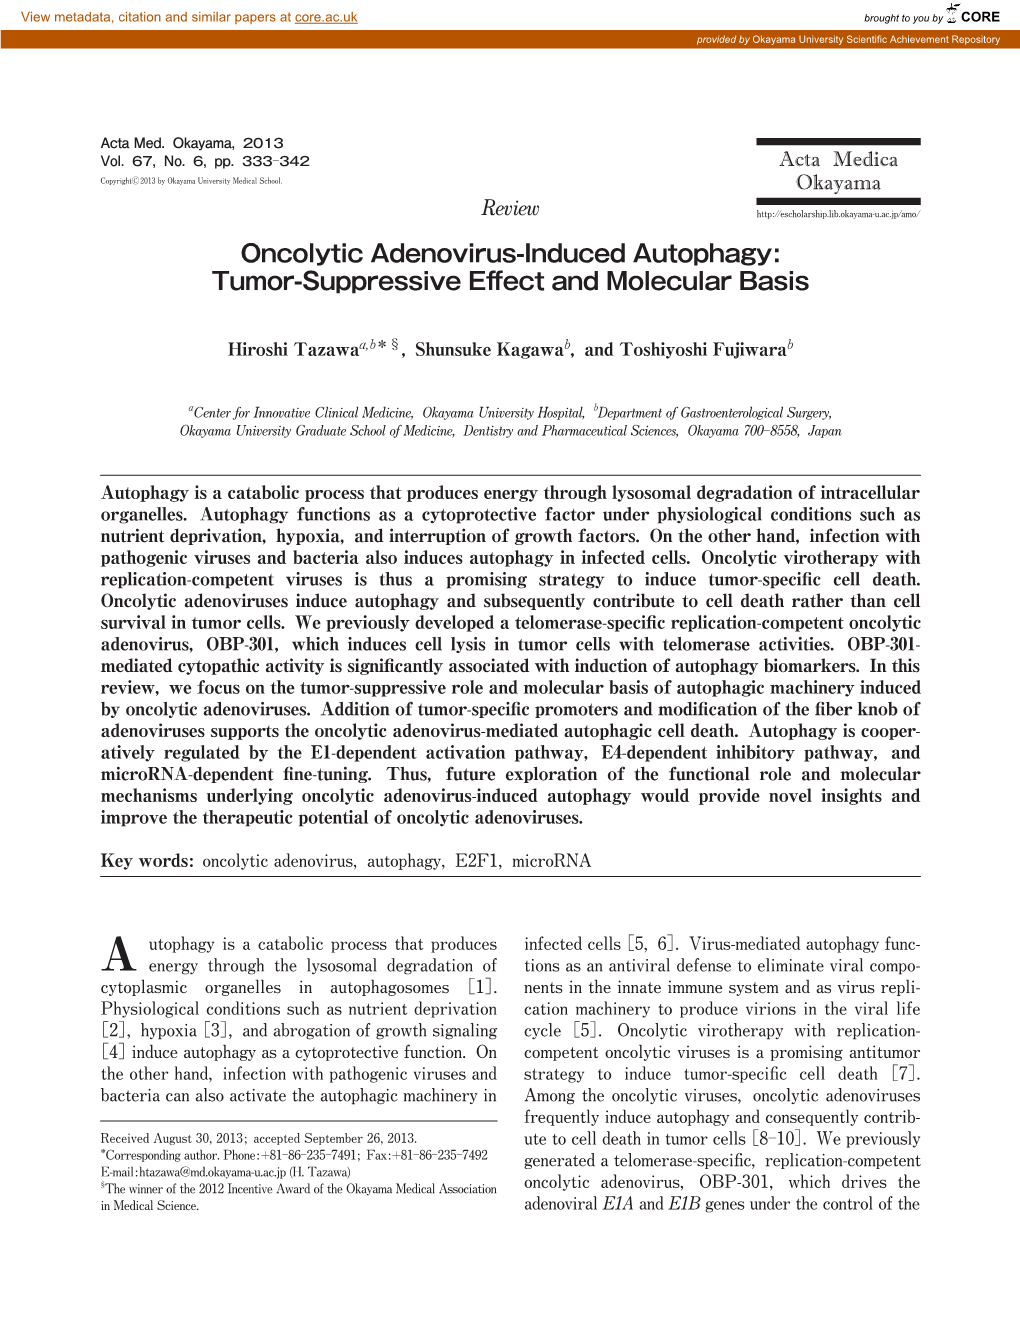 Oncolytic Adenovirus-Induced Autophagy: Tumor-Suppressive Effect and Molecular Basis